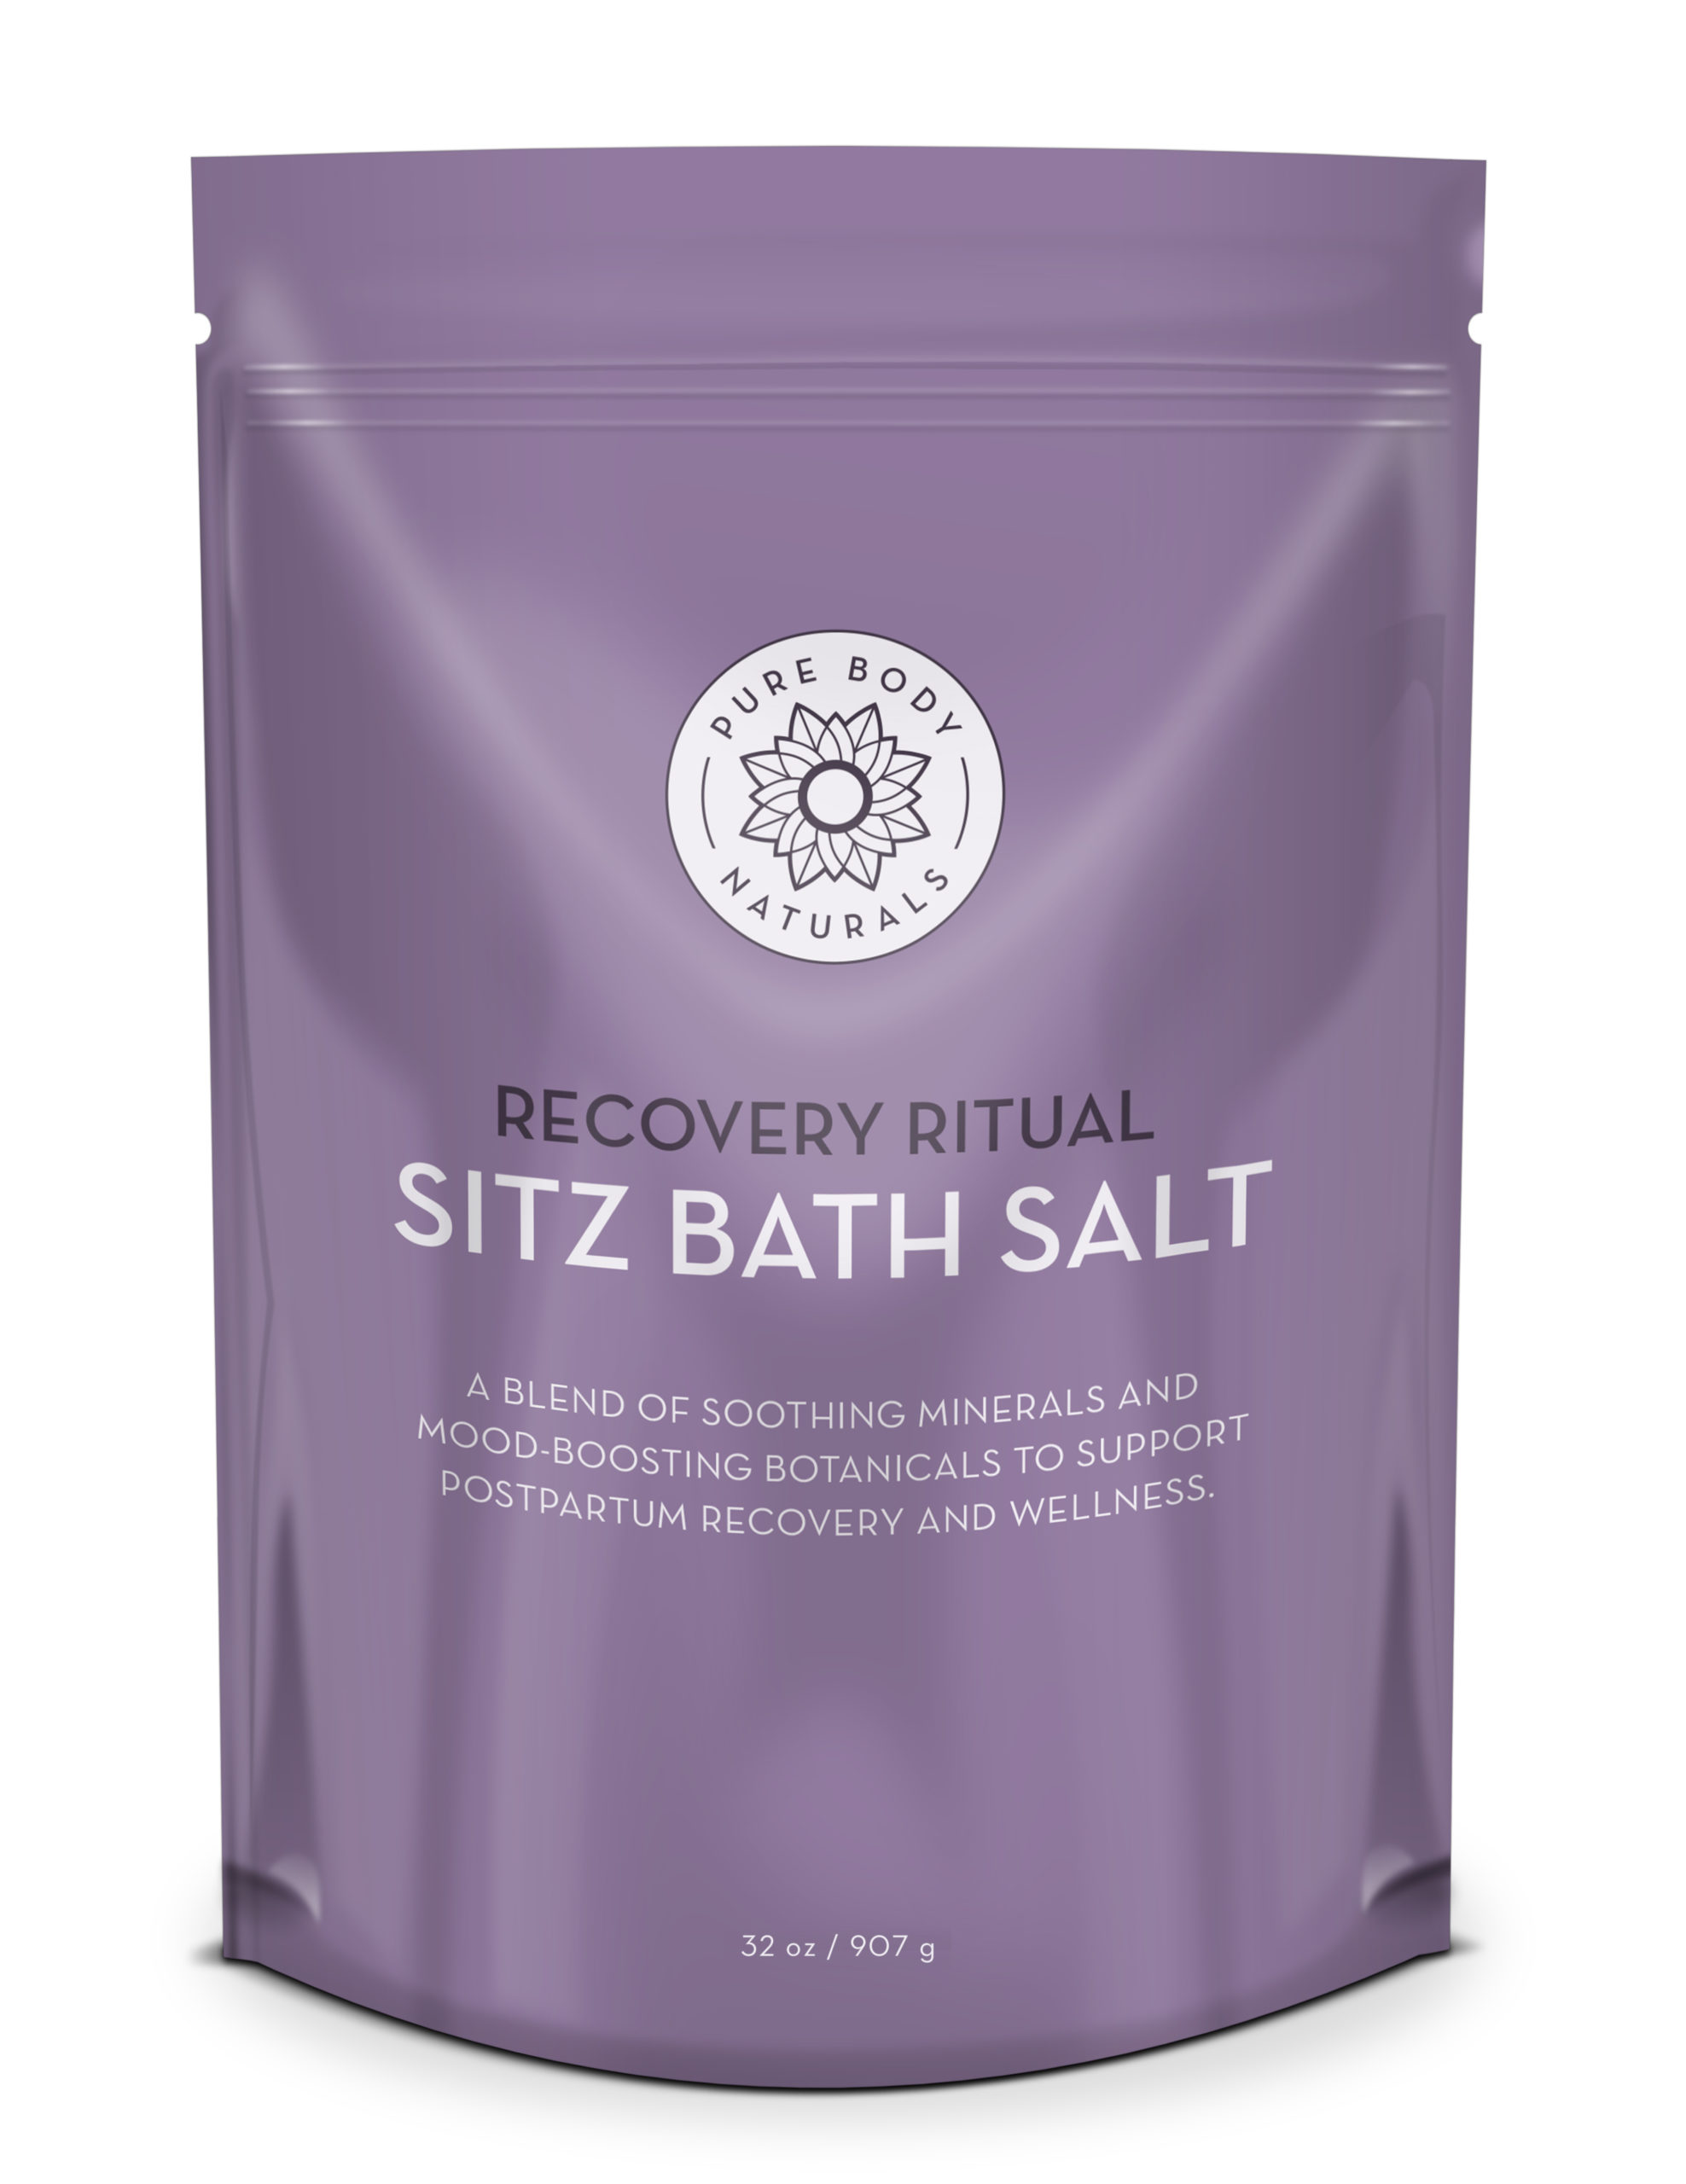 A photo of a bottle of a bag of Sitz Bath Salt, 32oz size